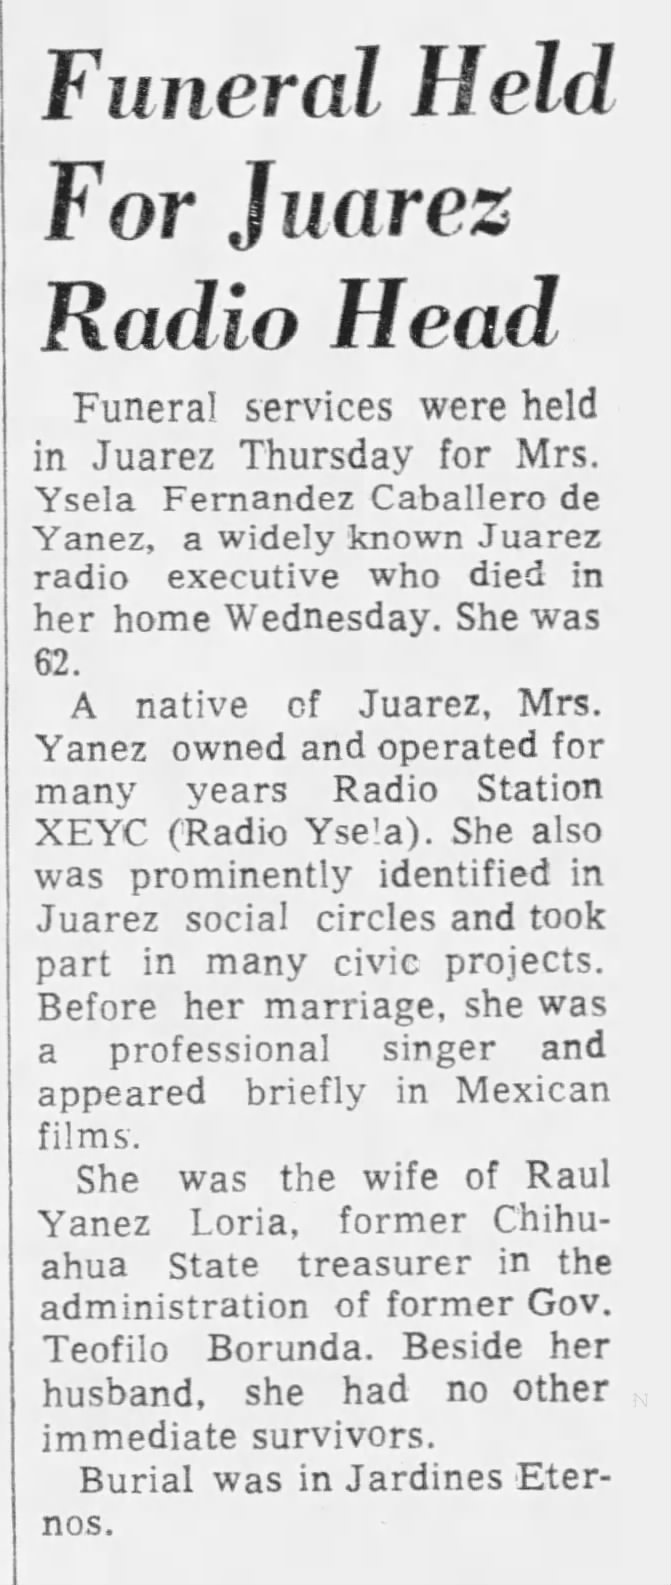 Funeral Held For Juarez Radio Head